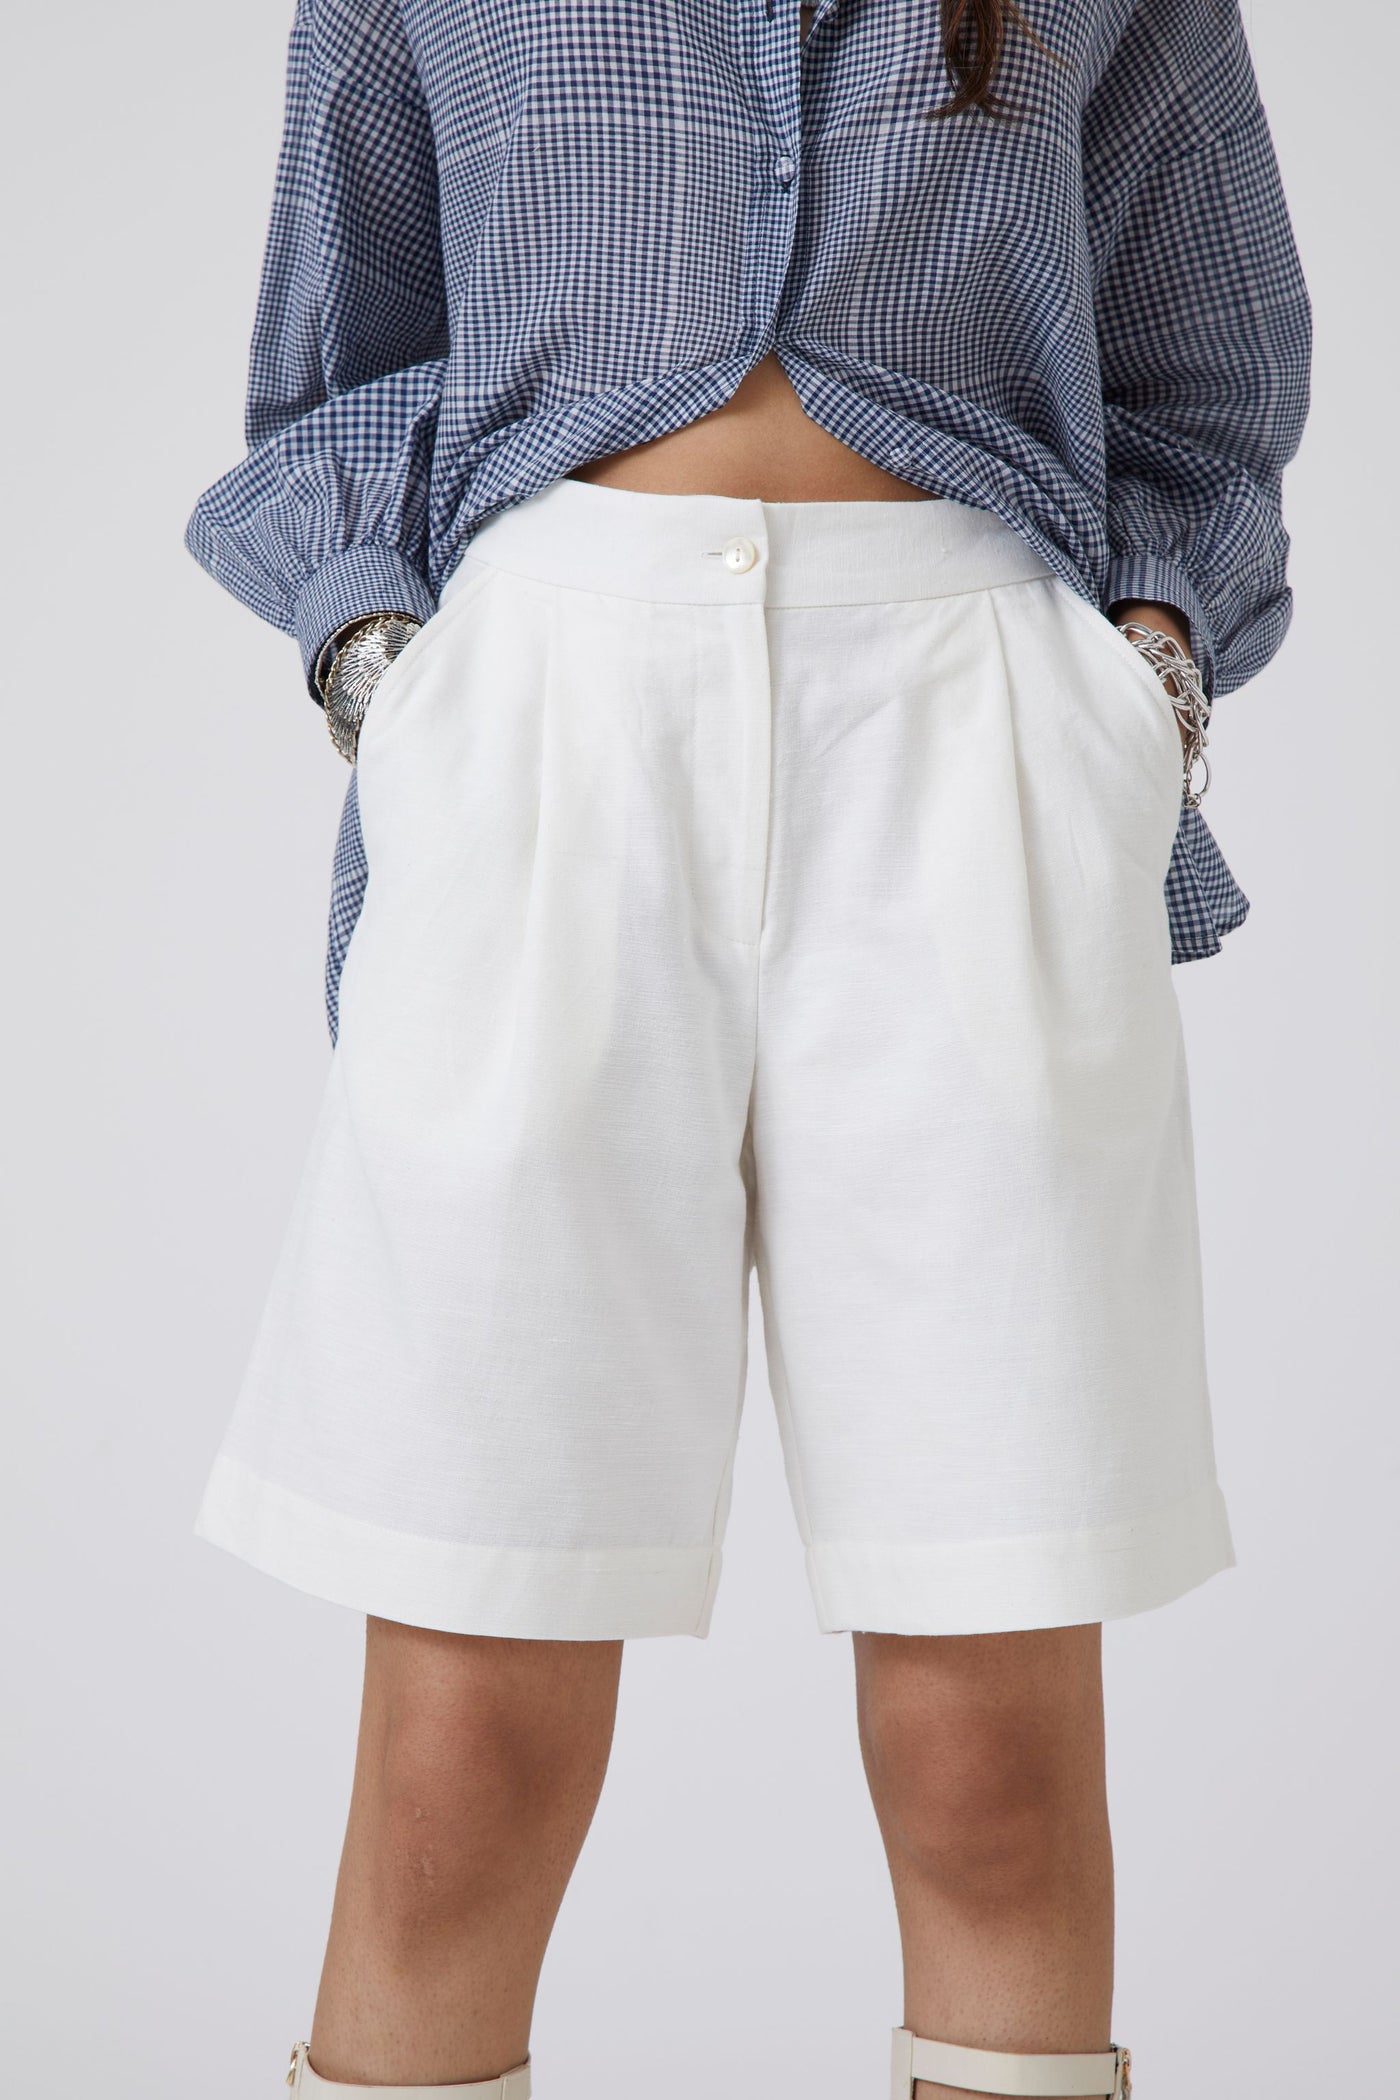 Tswalu Milk Shorts | Regular High-Waisted White Bermuda Shorts | Certified Organic Cotton Twill